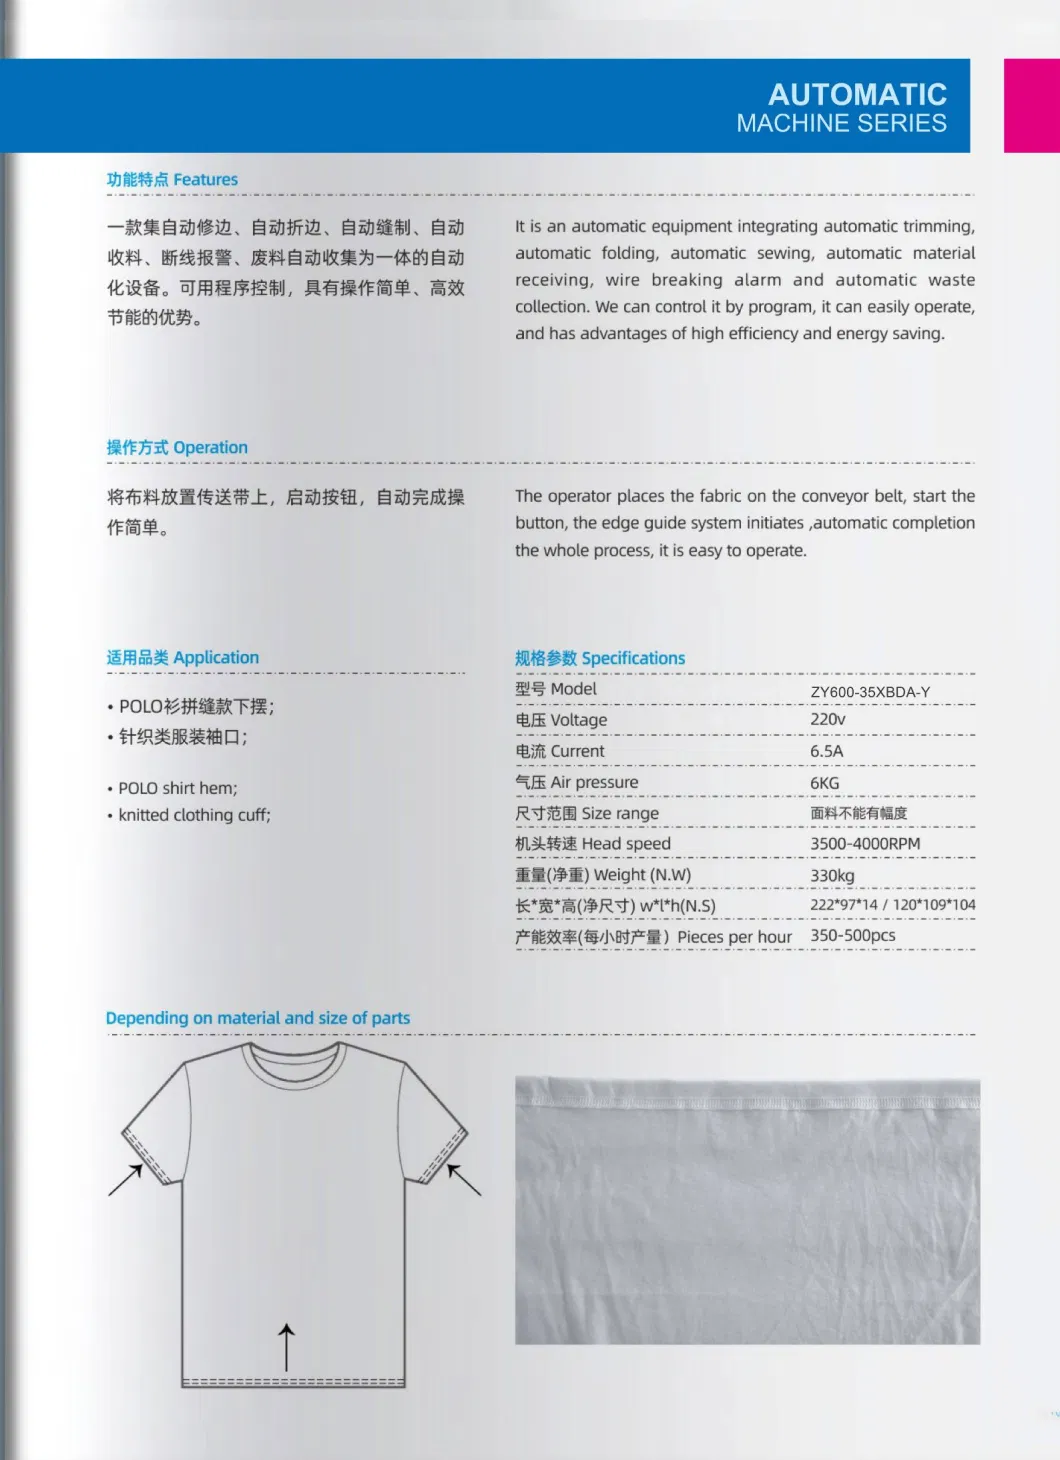 Zy600-35xbda-Y Zoyer Full Automatic T-Shirt Machine Sleeve Neck Bottom Making Coverstitch Sewing Machine